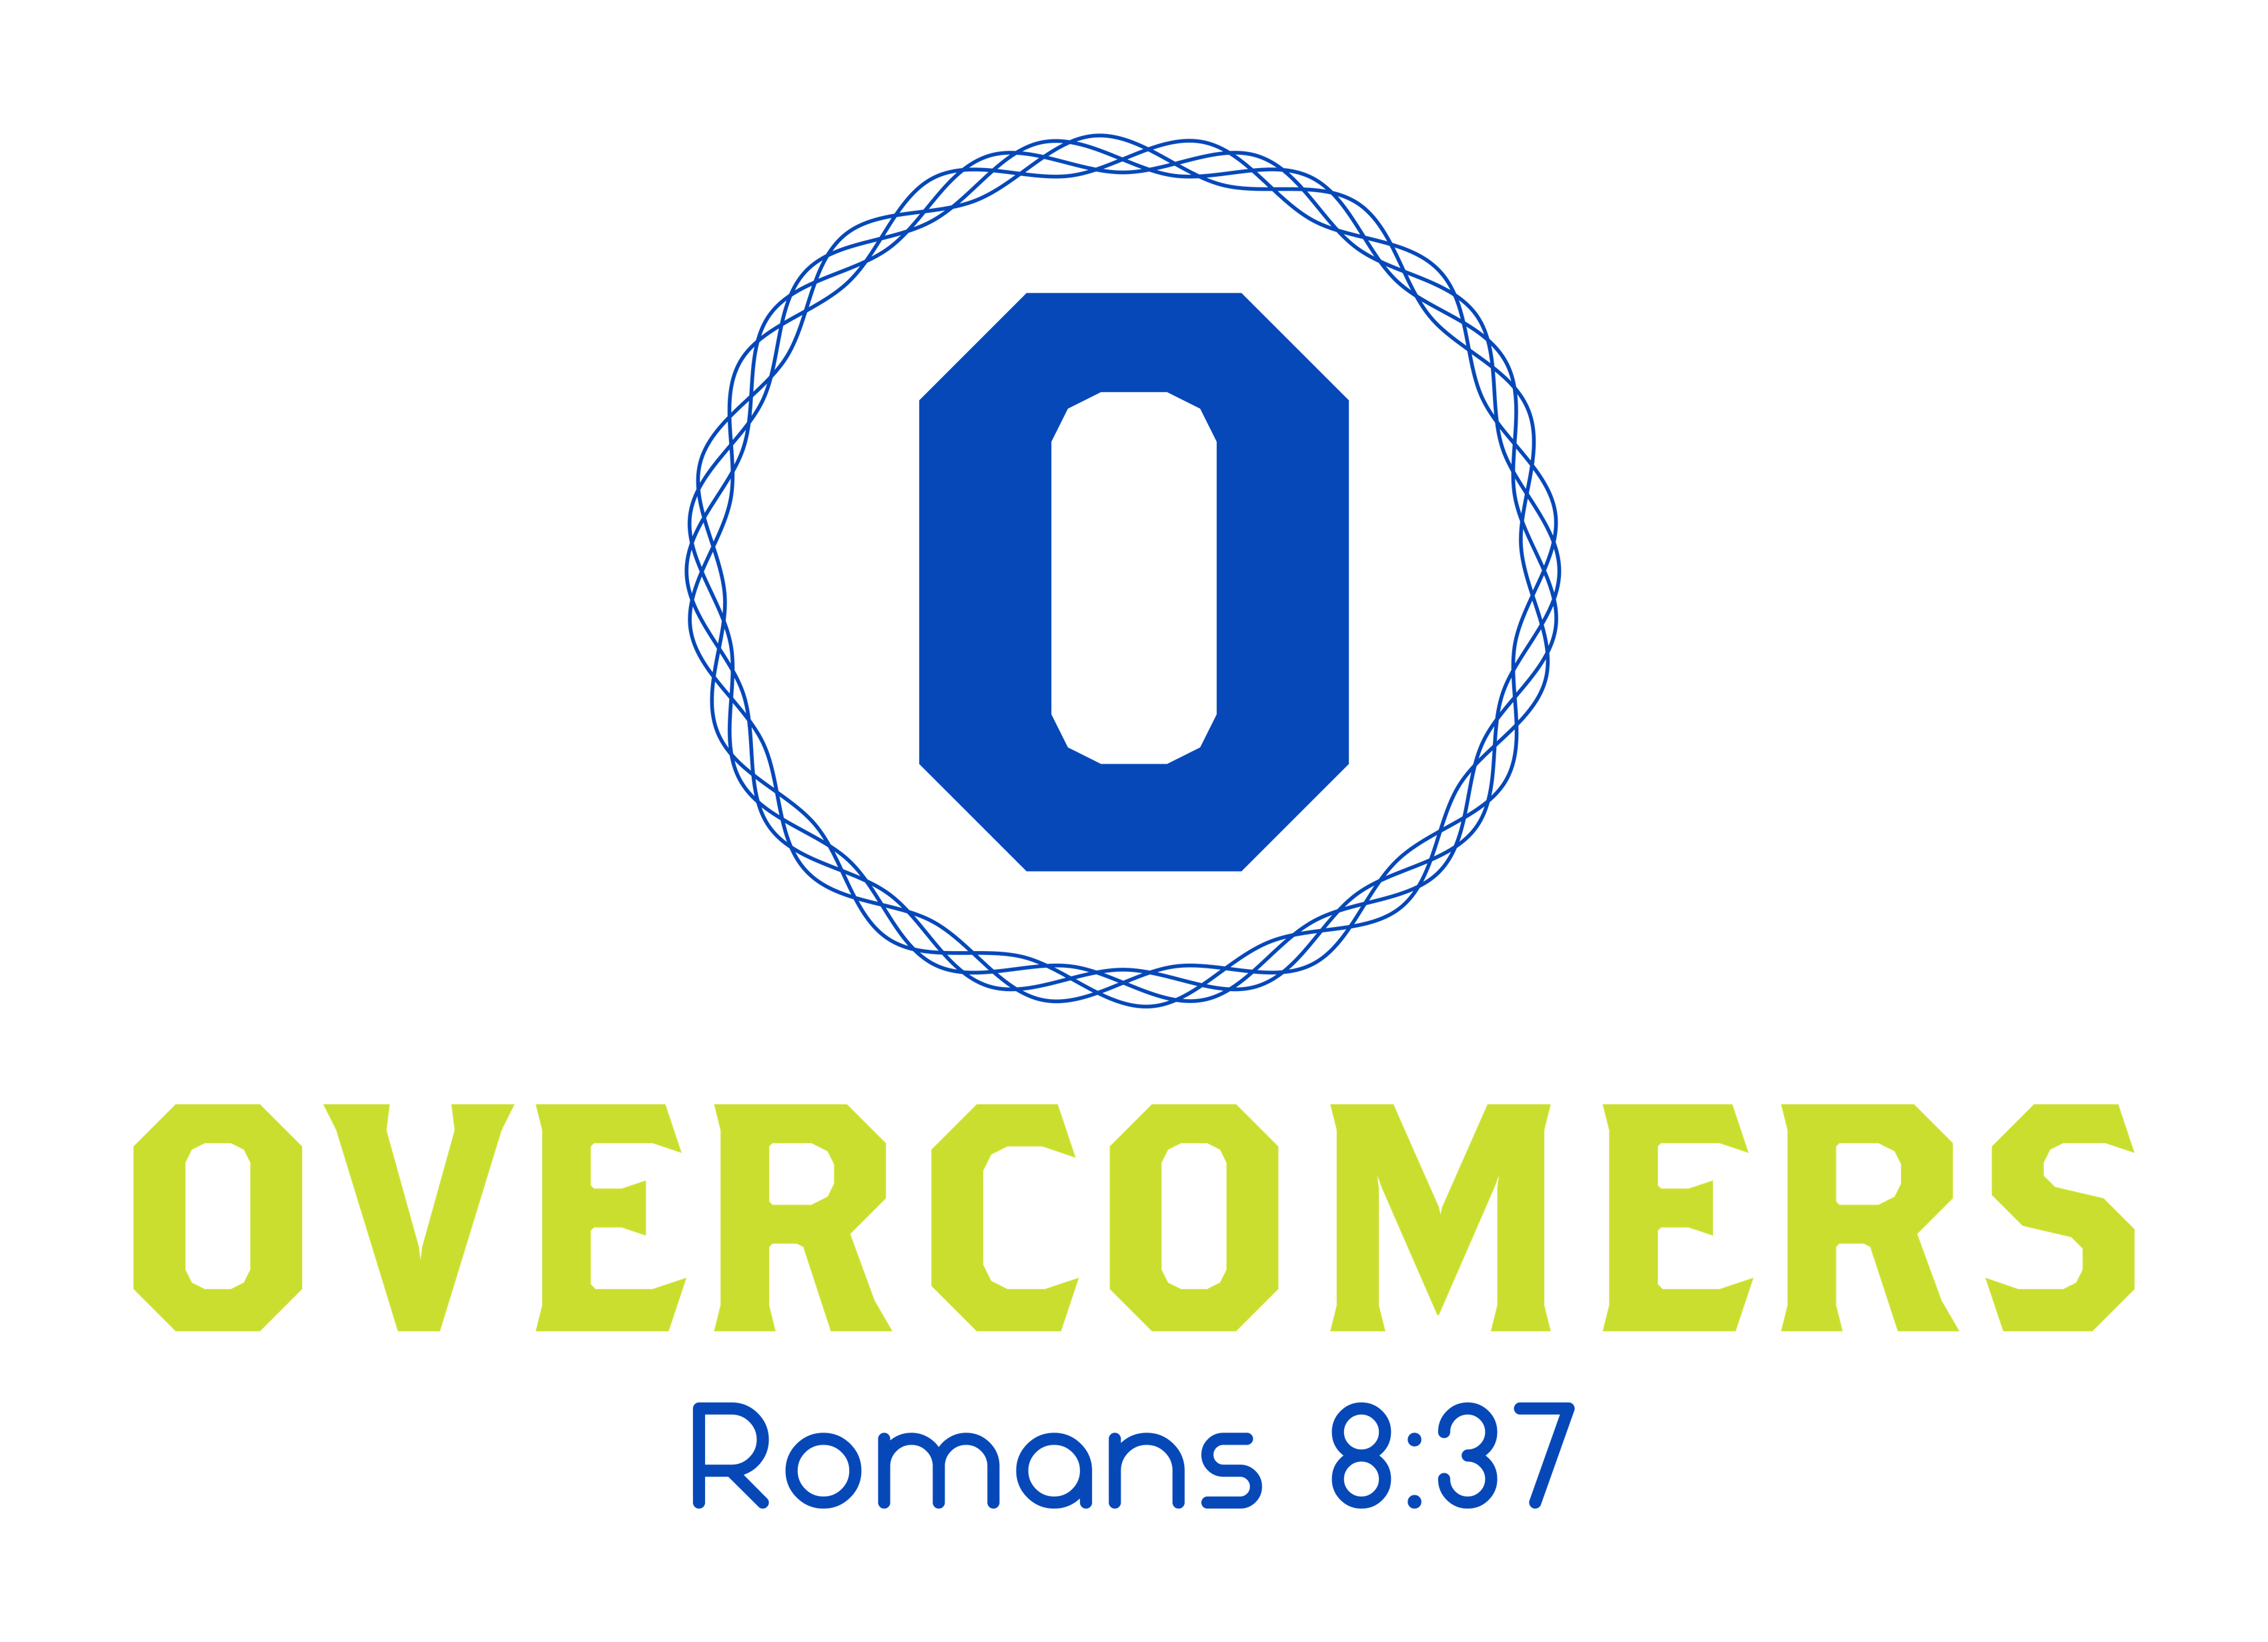 Overcomers Logo - We Are Overcomers